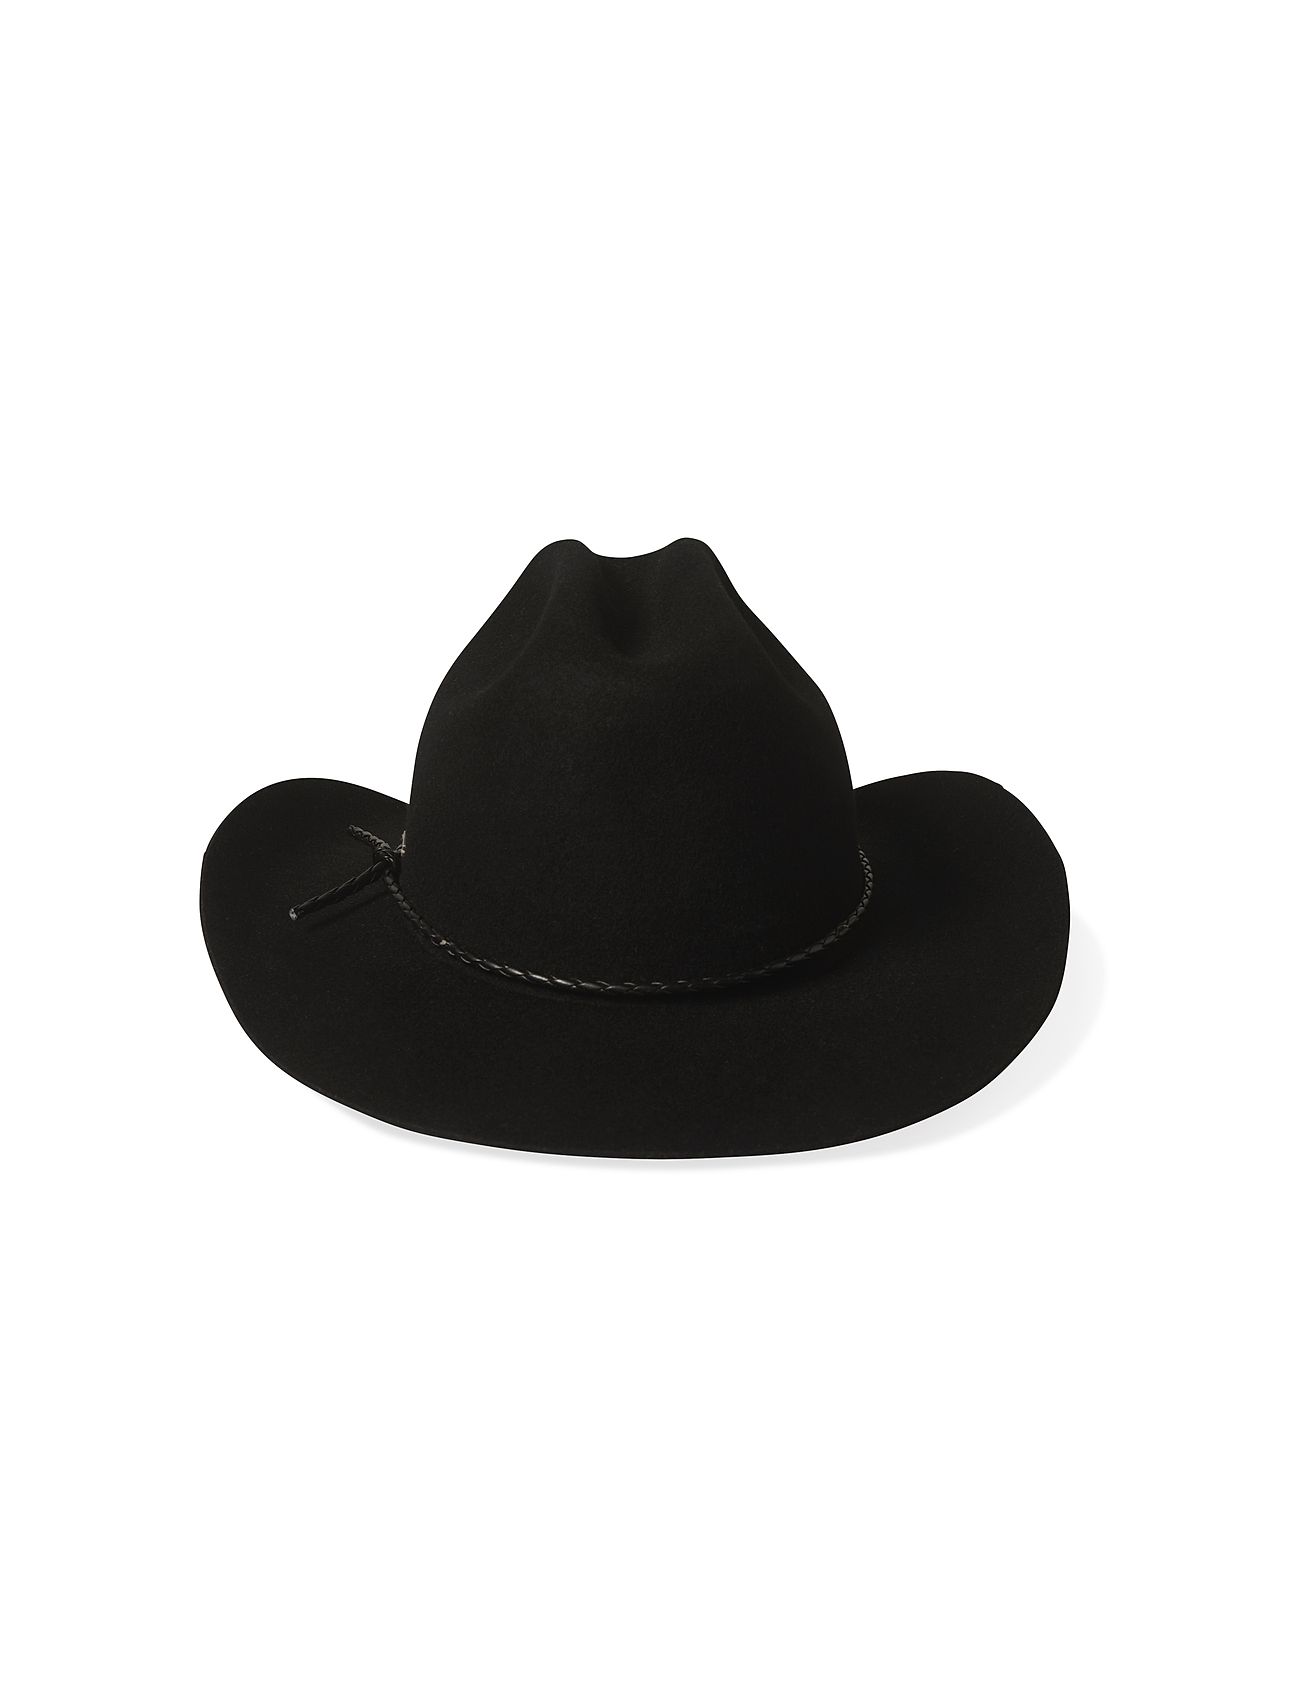 Range Cowboy Hat Accessories Headwear Hats Black Brixton